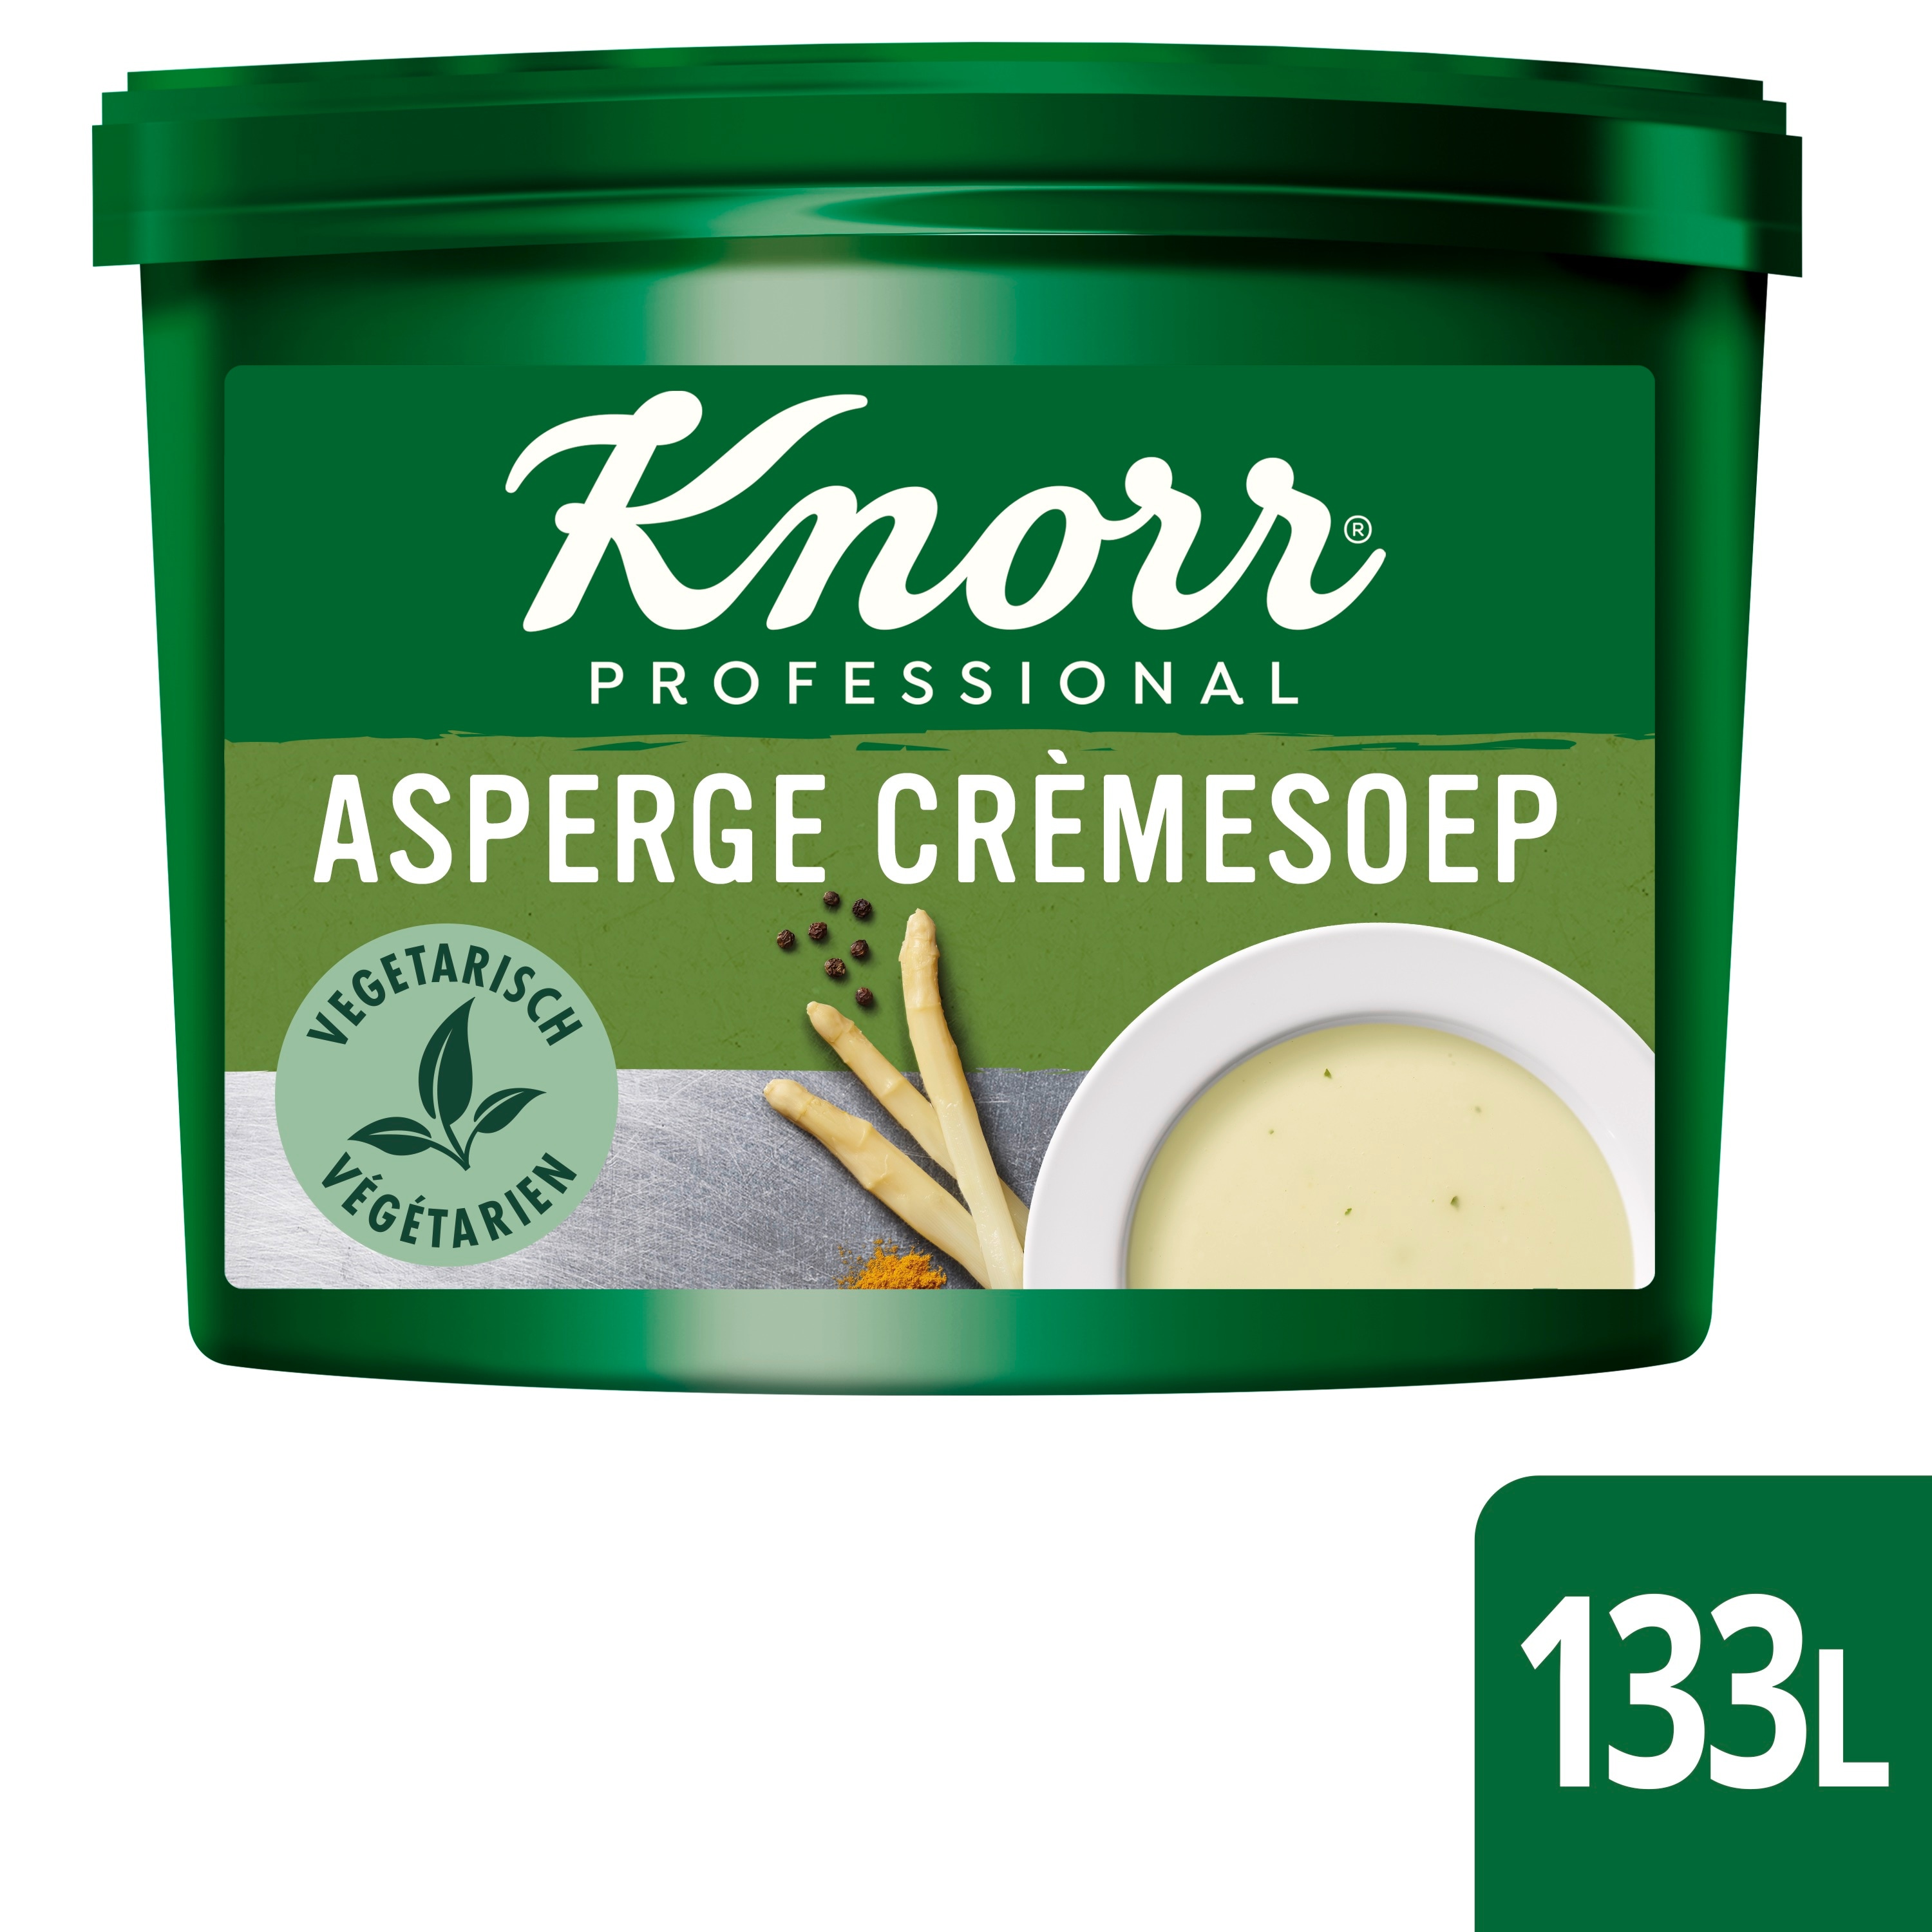 Knorr Professional Asperge Crèmesoep Poeder 10 kg - 